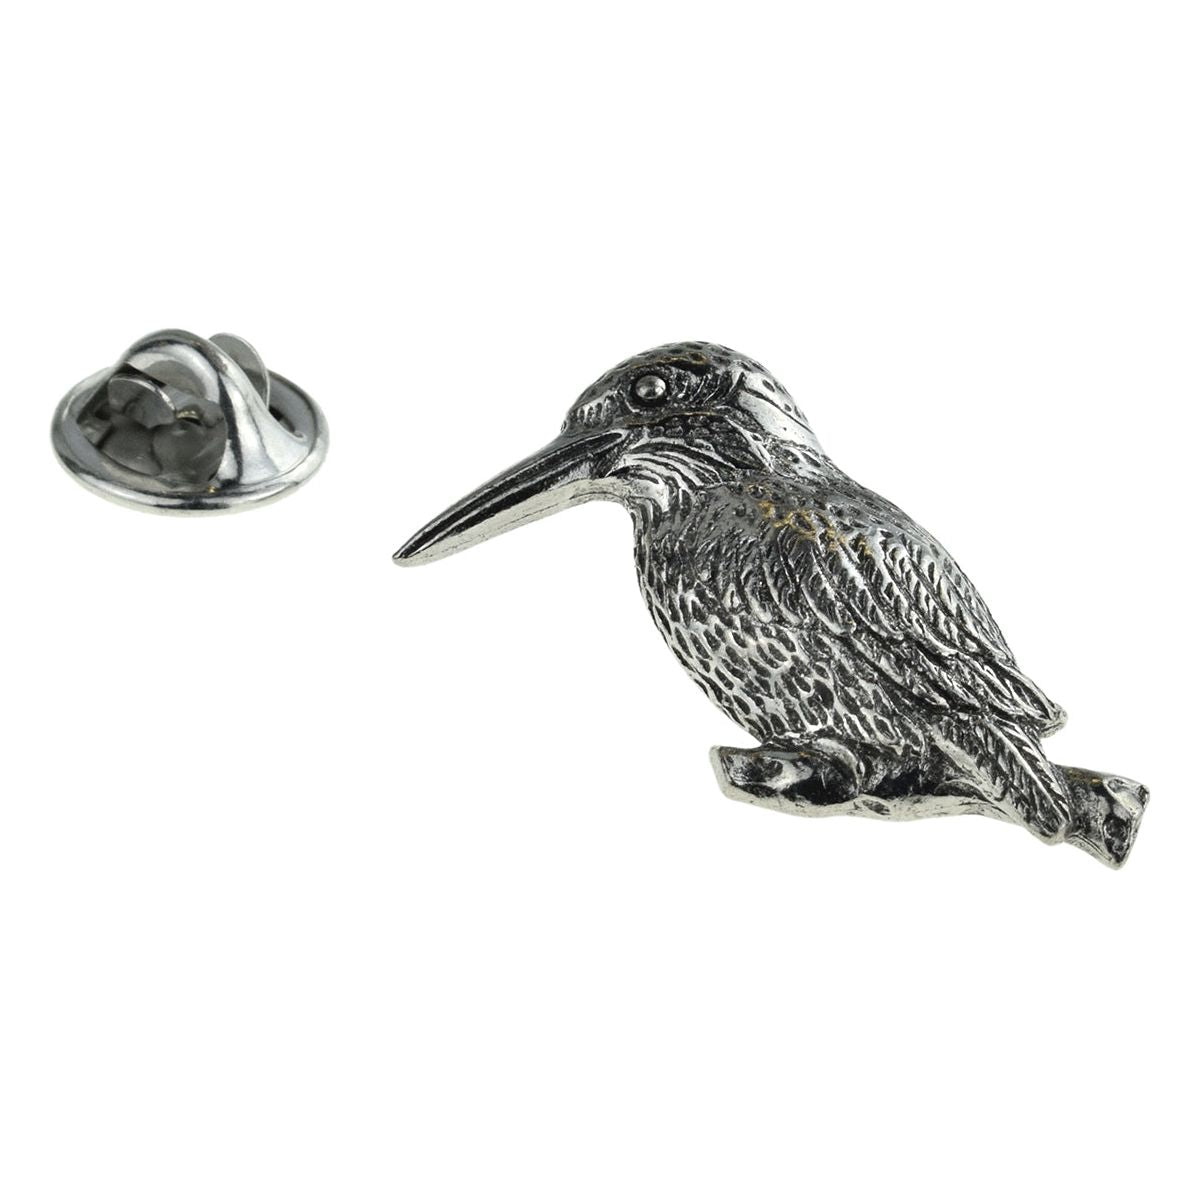 Kingfisher Design Pewter Lapel Pin Badge - Ashton and Finch